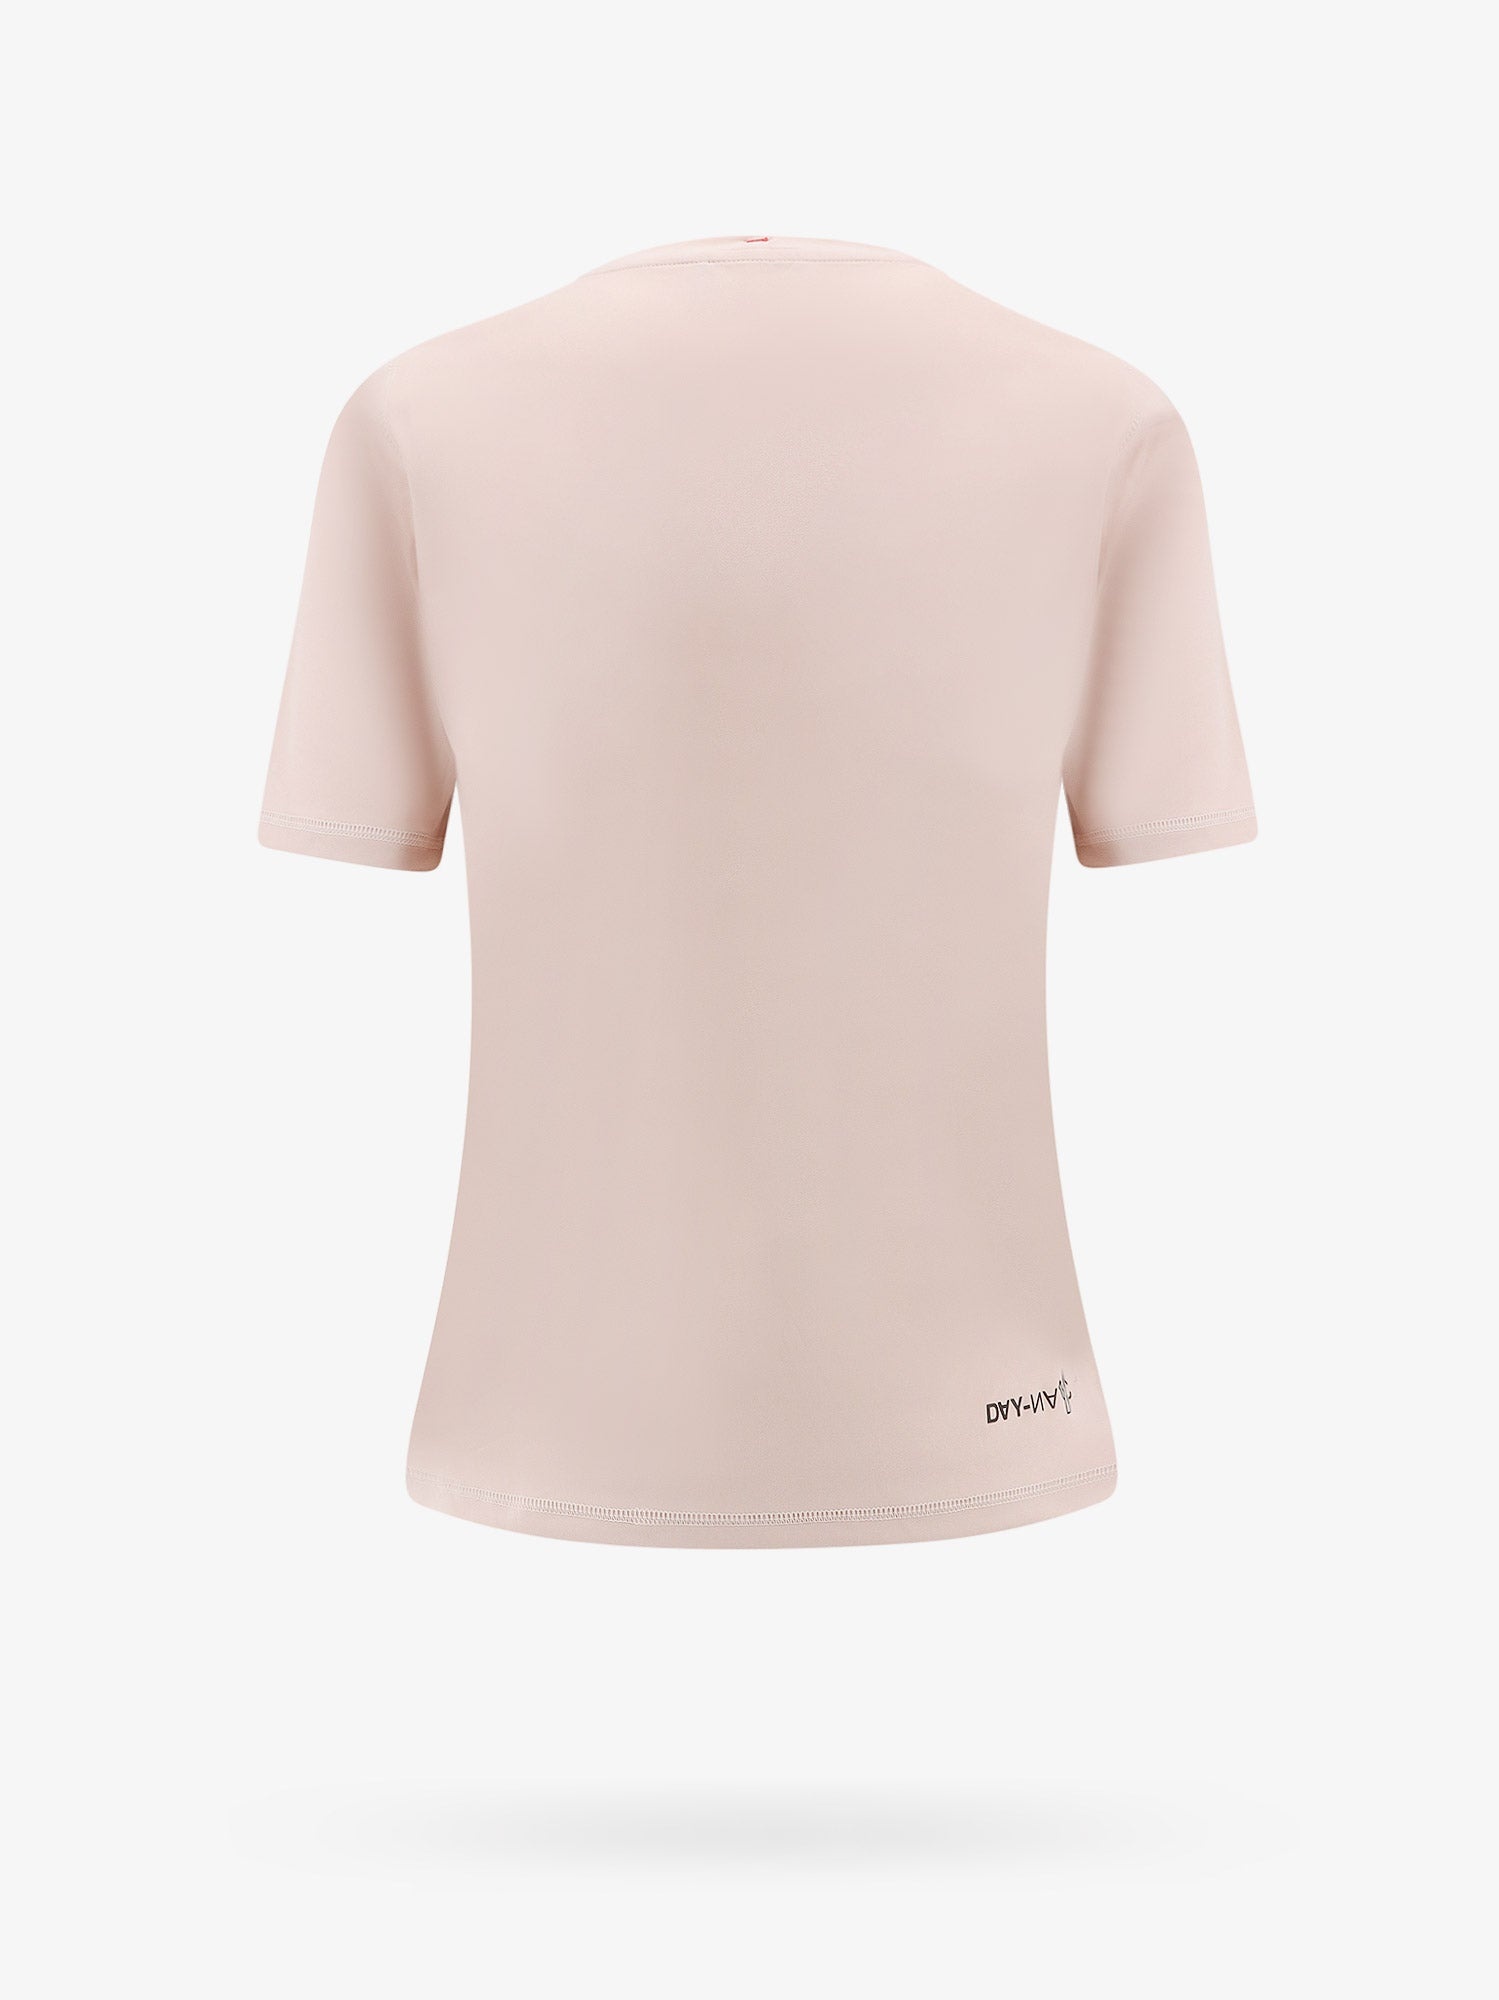 Moncler Grenoble Woman T-Shirt Woman Pink T-Shirts - 2